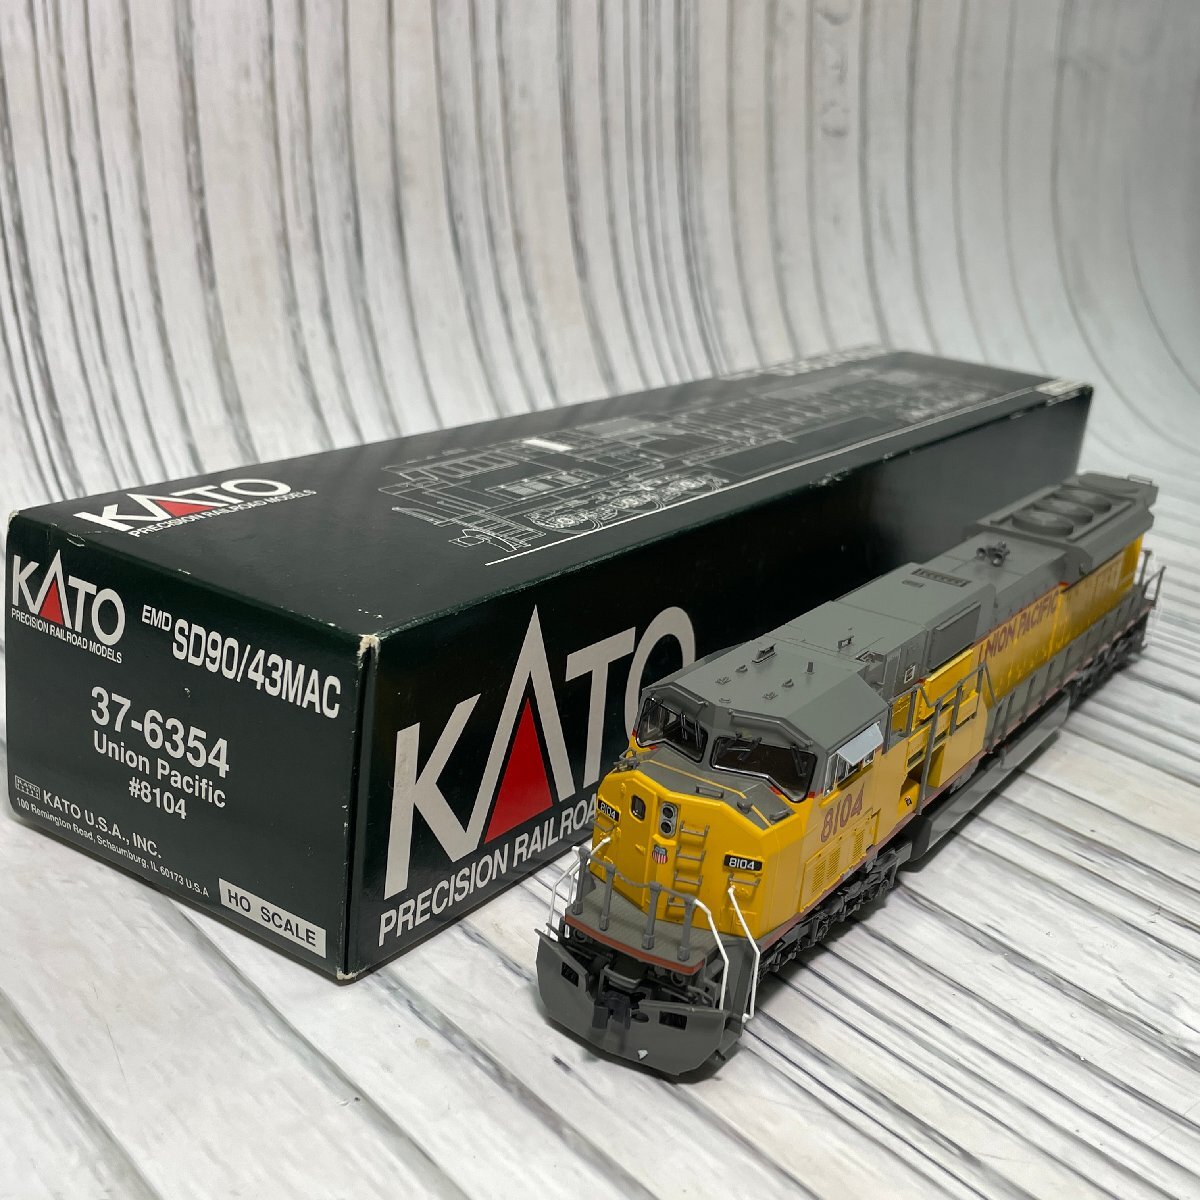 m002L D1(80) 1 jpy ~ operation goods ① KATO EMD SD90/43 MAC 8104 UNION PACIFIC railroad model HO gauge Union Pacific Kato 